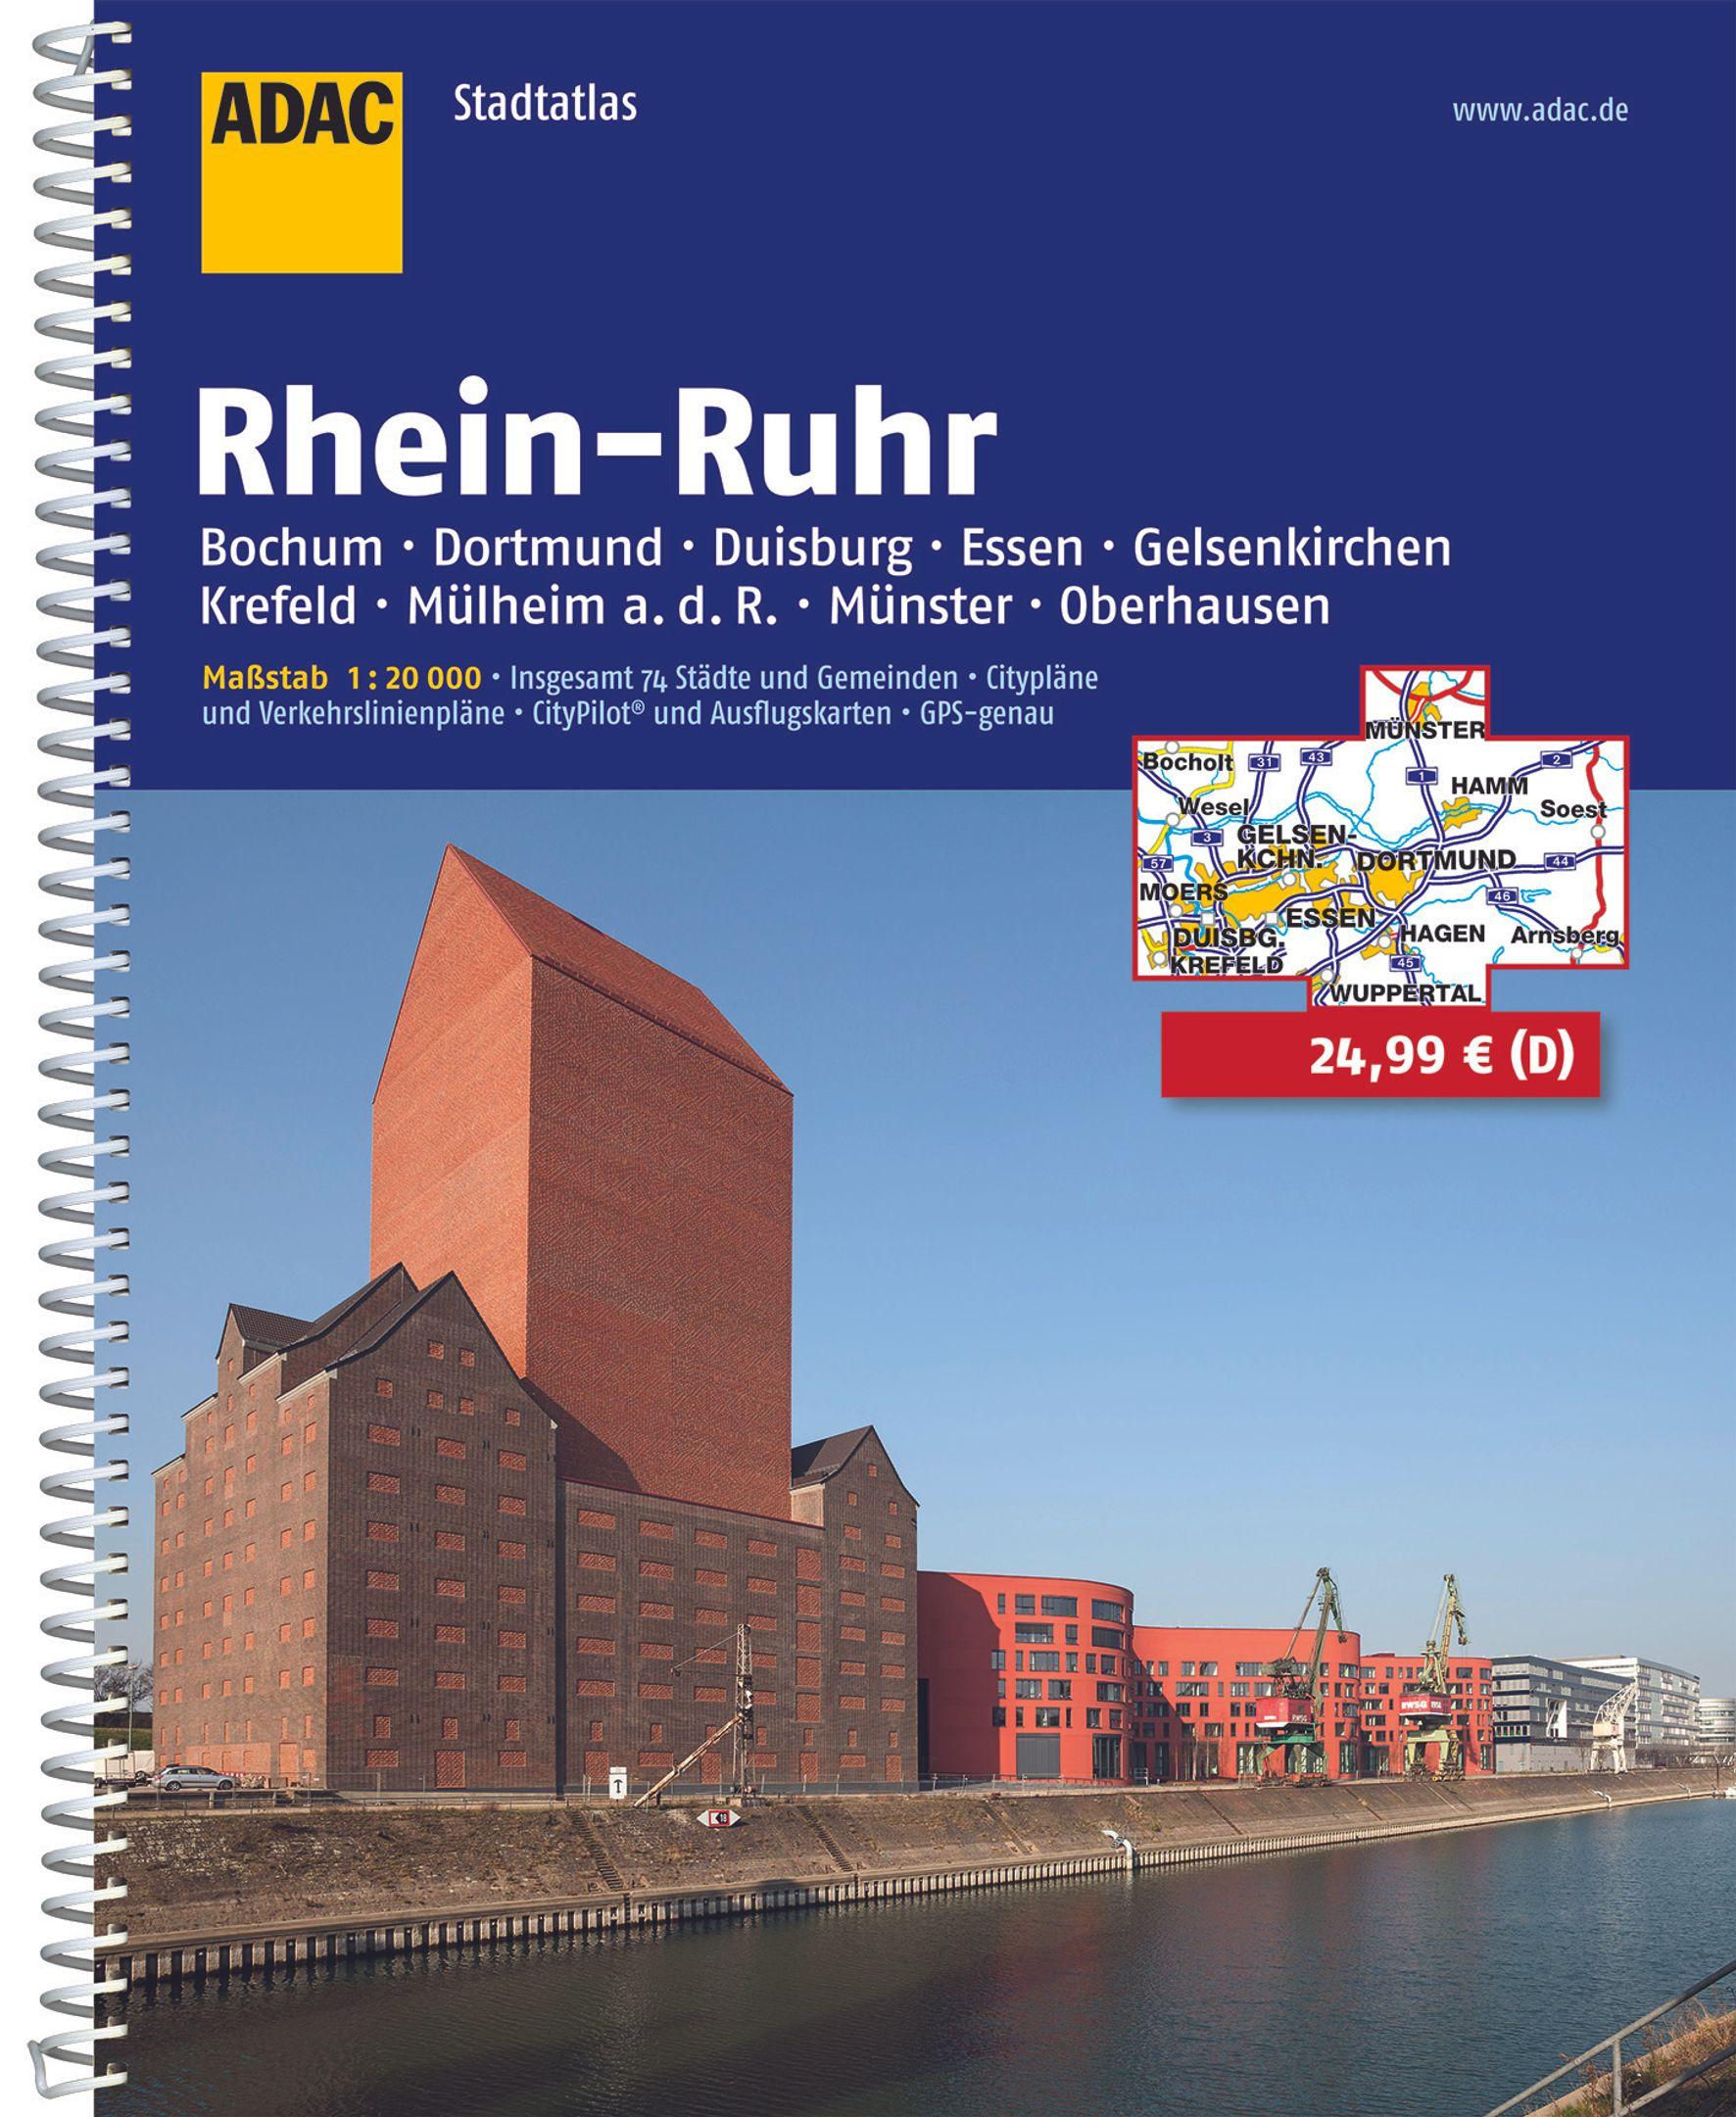 ADAC StadtAtlas Rhein-Ruhr 1 : 20 000